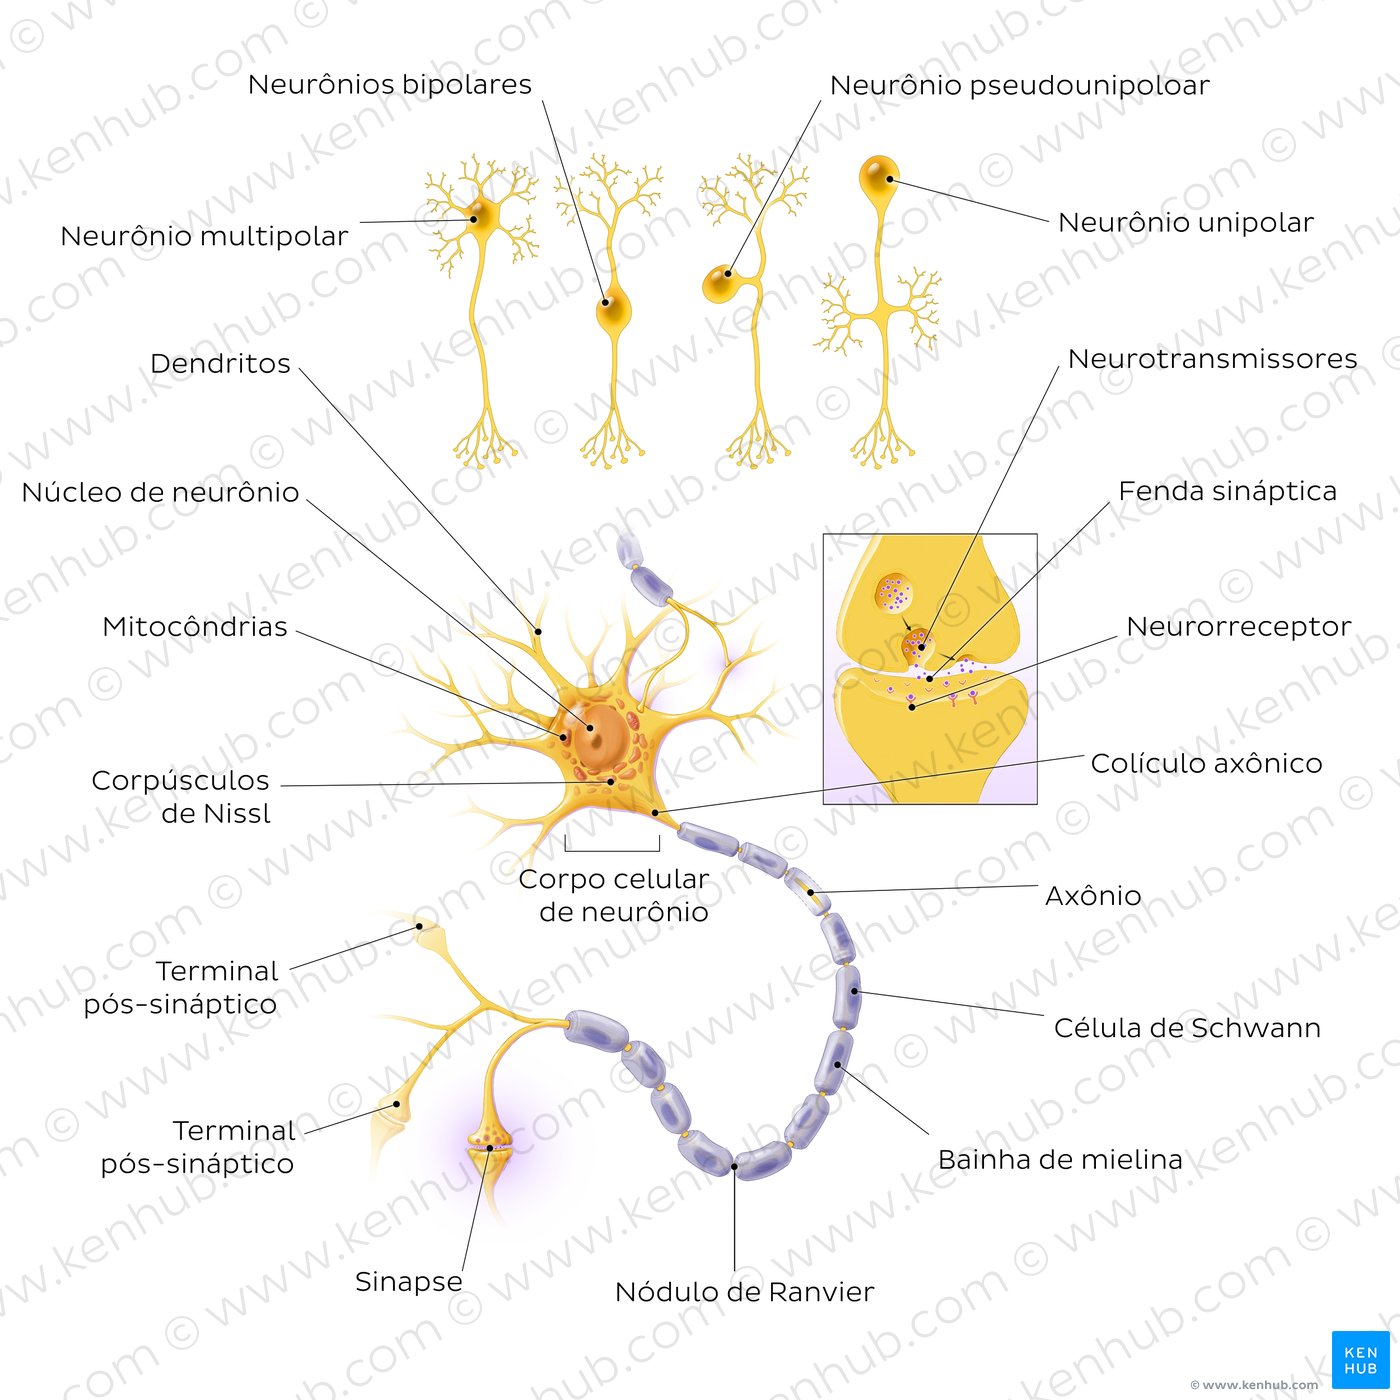 Tipos de neurônios e estrutura de sinapses